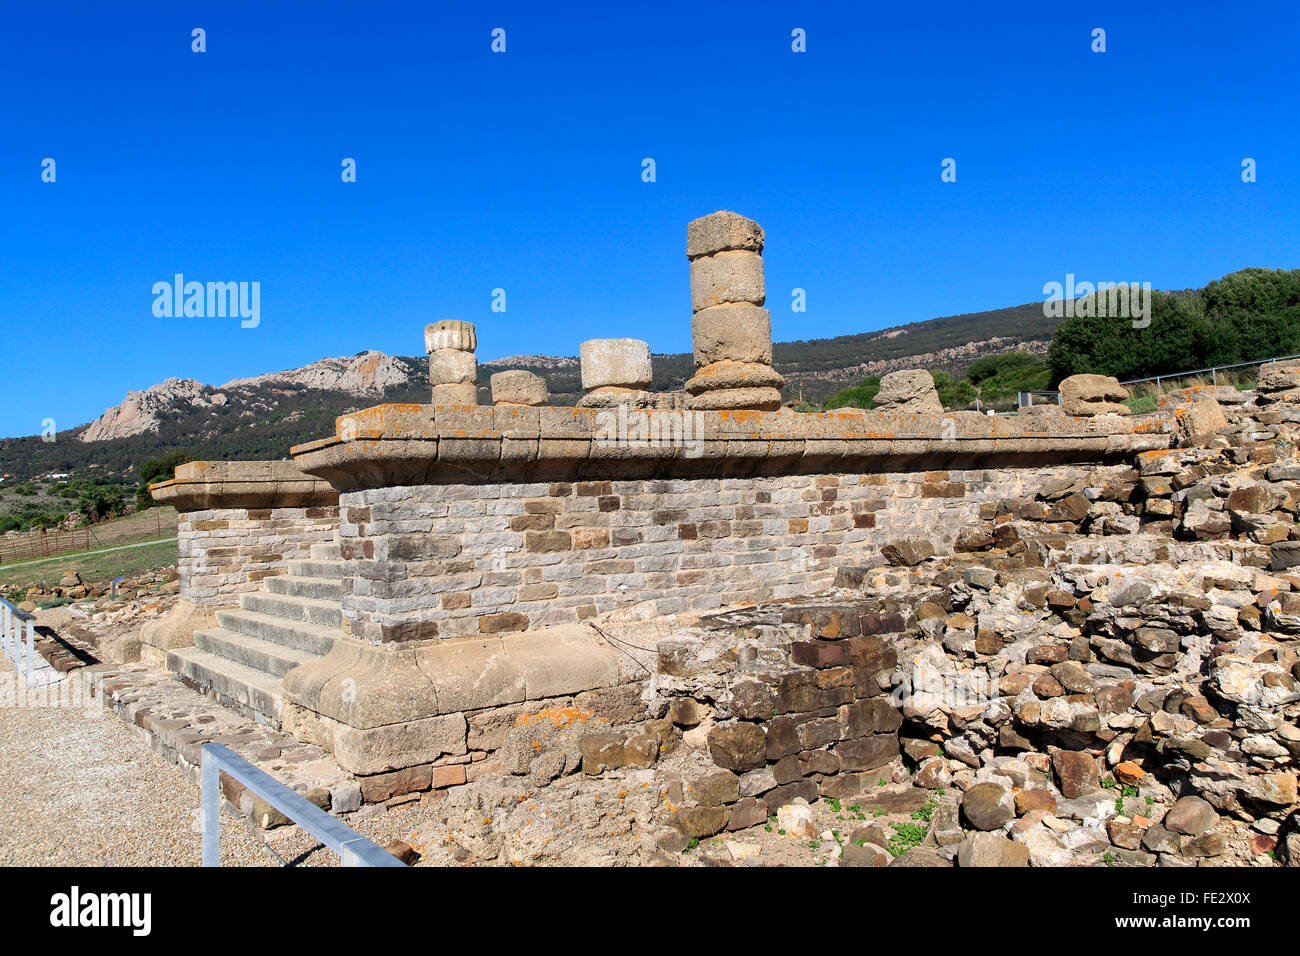 Temple de Baelo Claudia, site romain de la province de Cadix, Espagne Banque D'Images